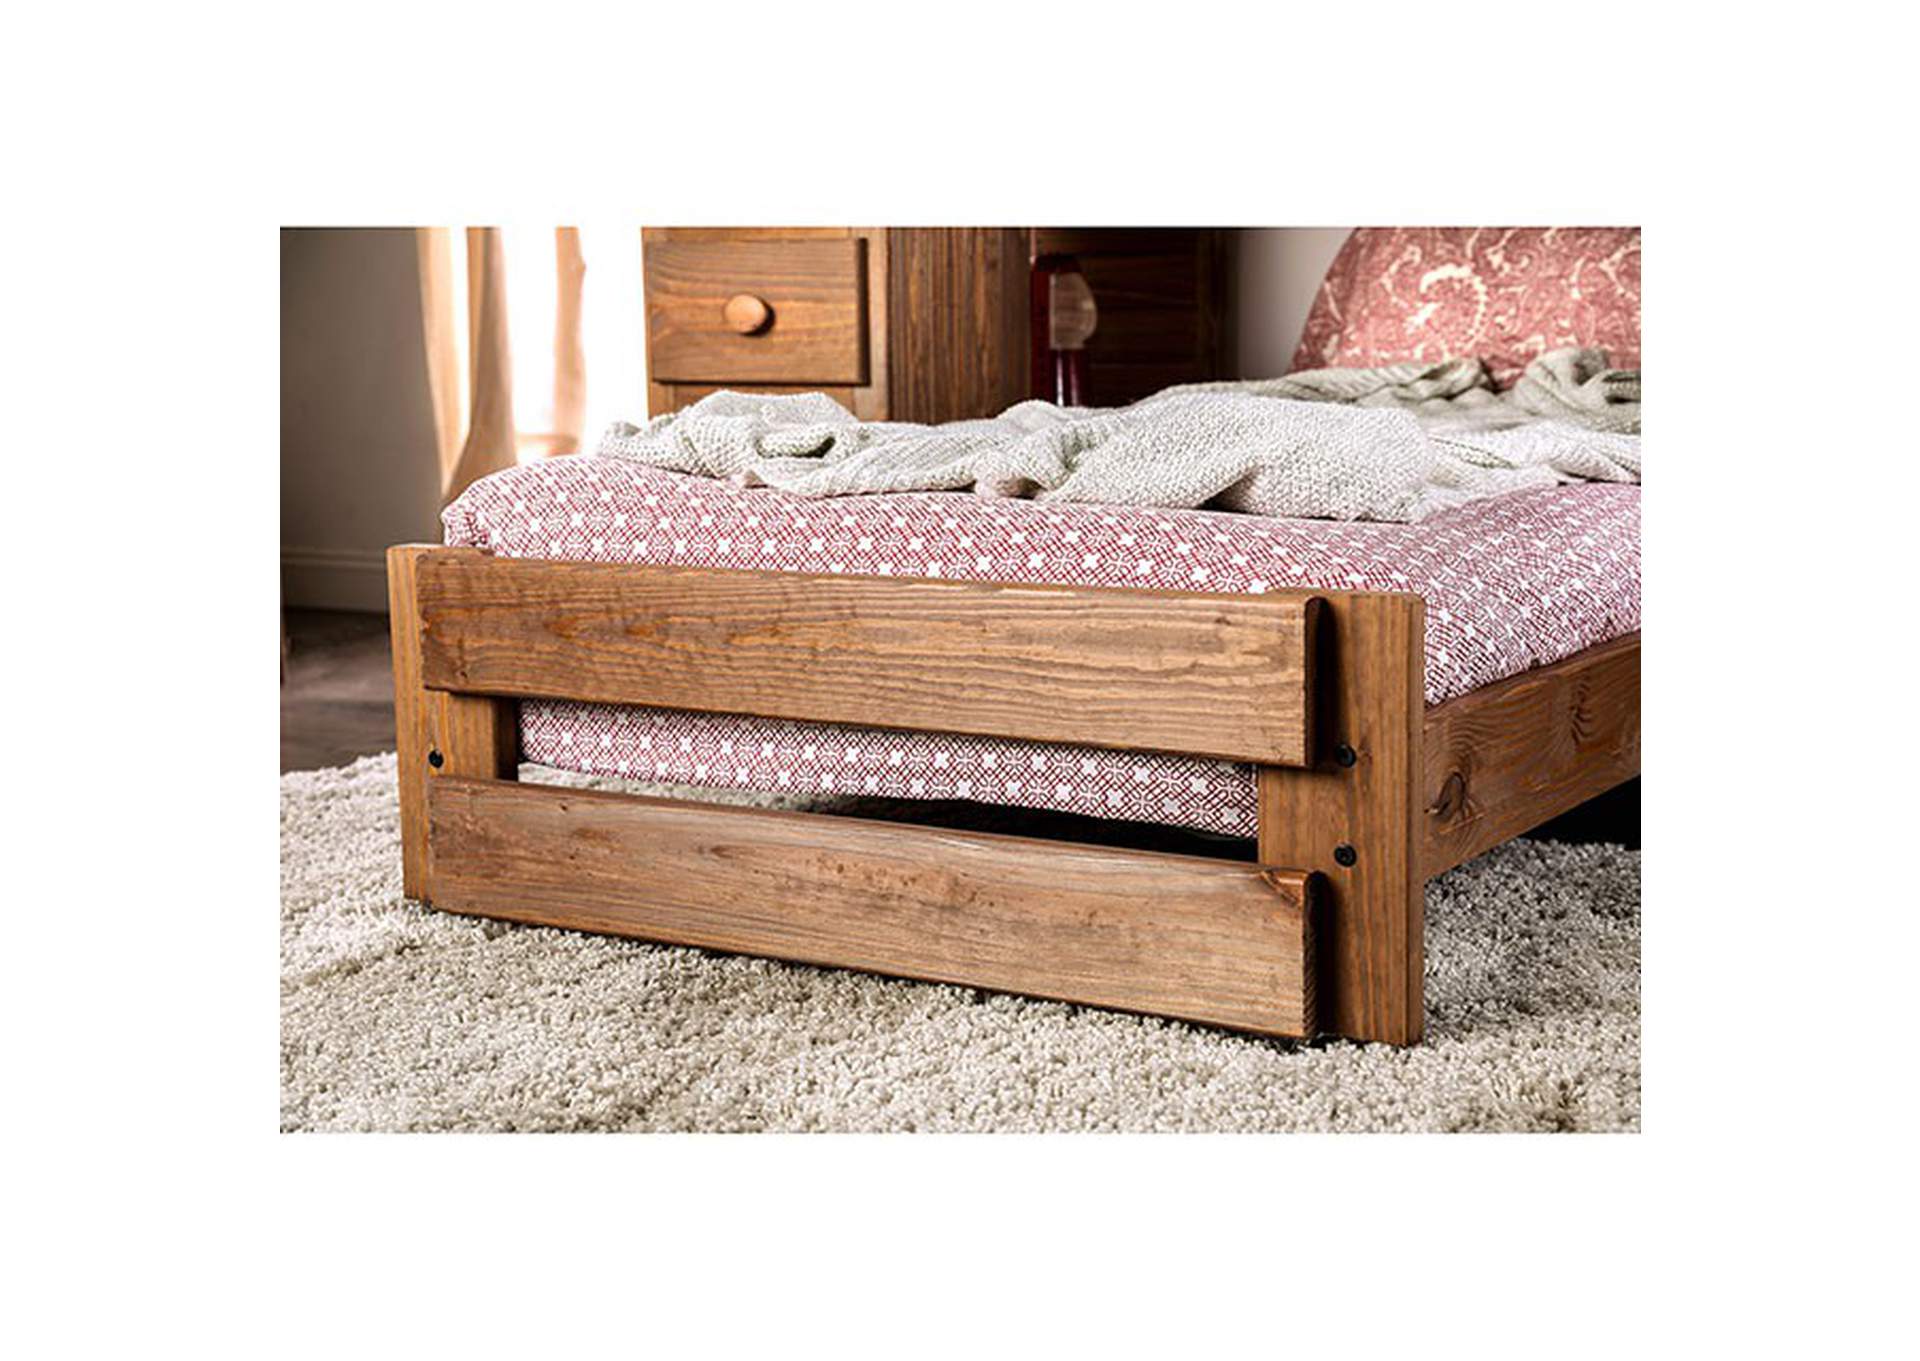 Beckford Twin/Twin Loft Bed,Furniture of America